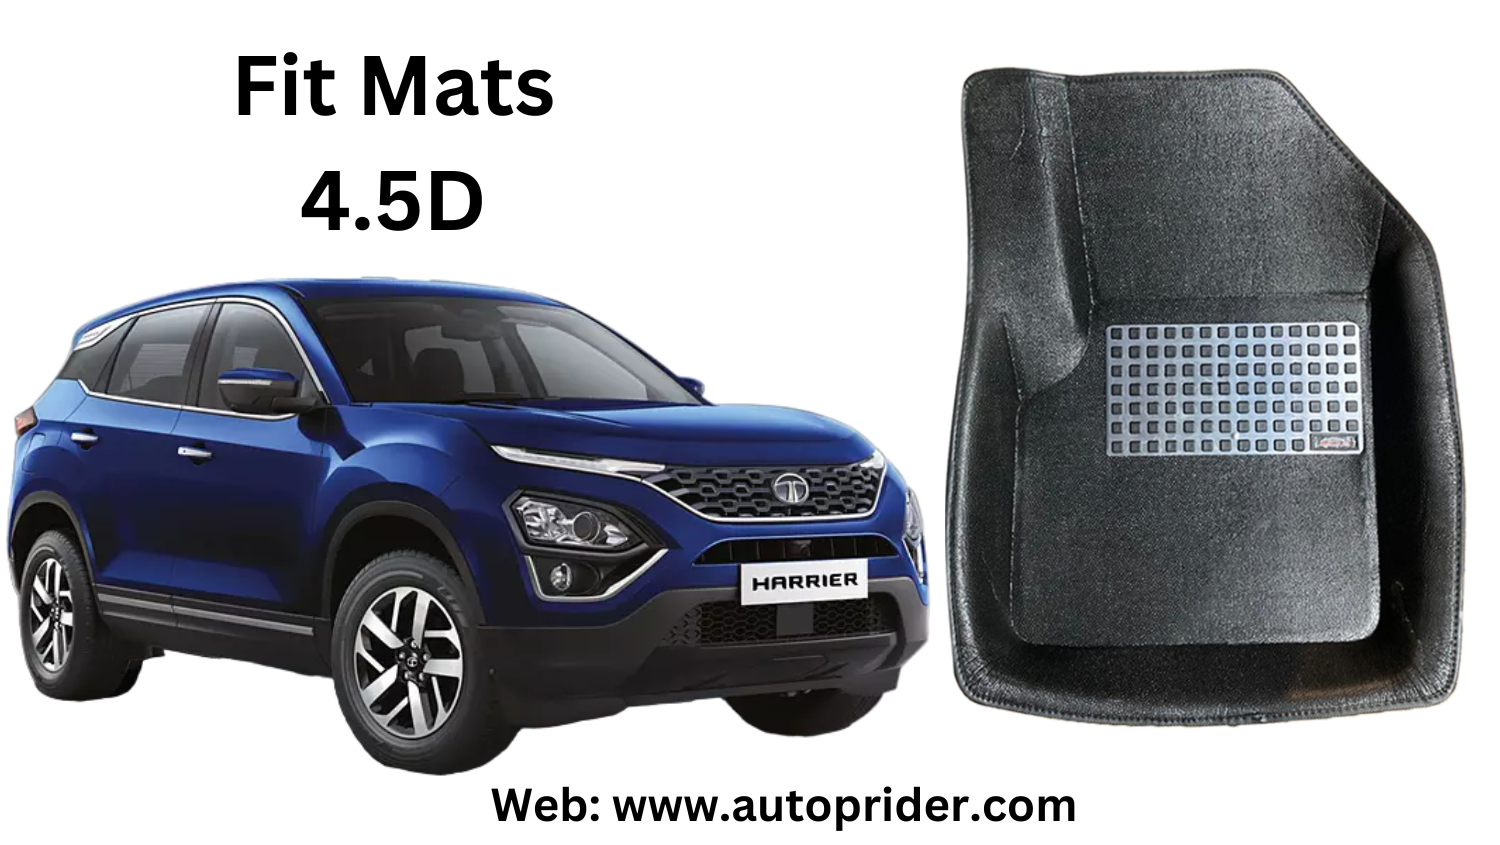 Autoprider | Fit Mats 4.5D Economy Car Mats for Tata Harrier